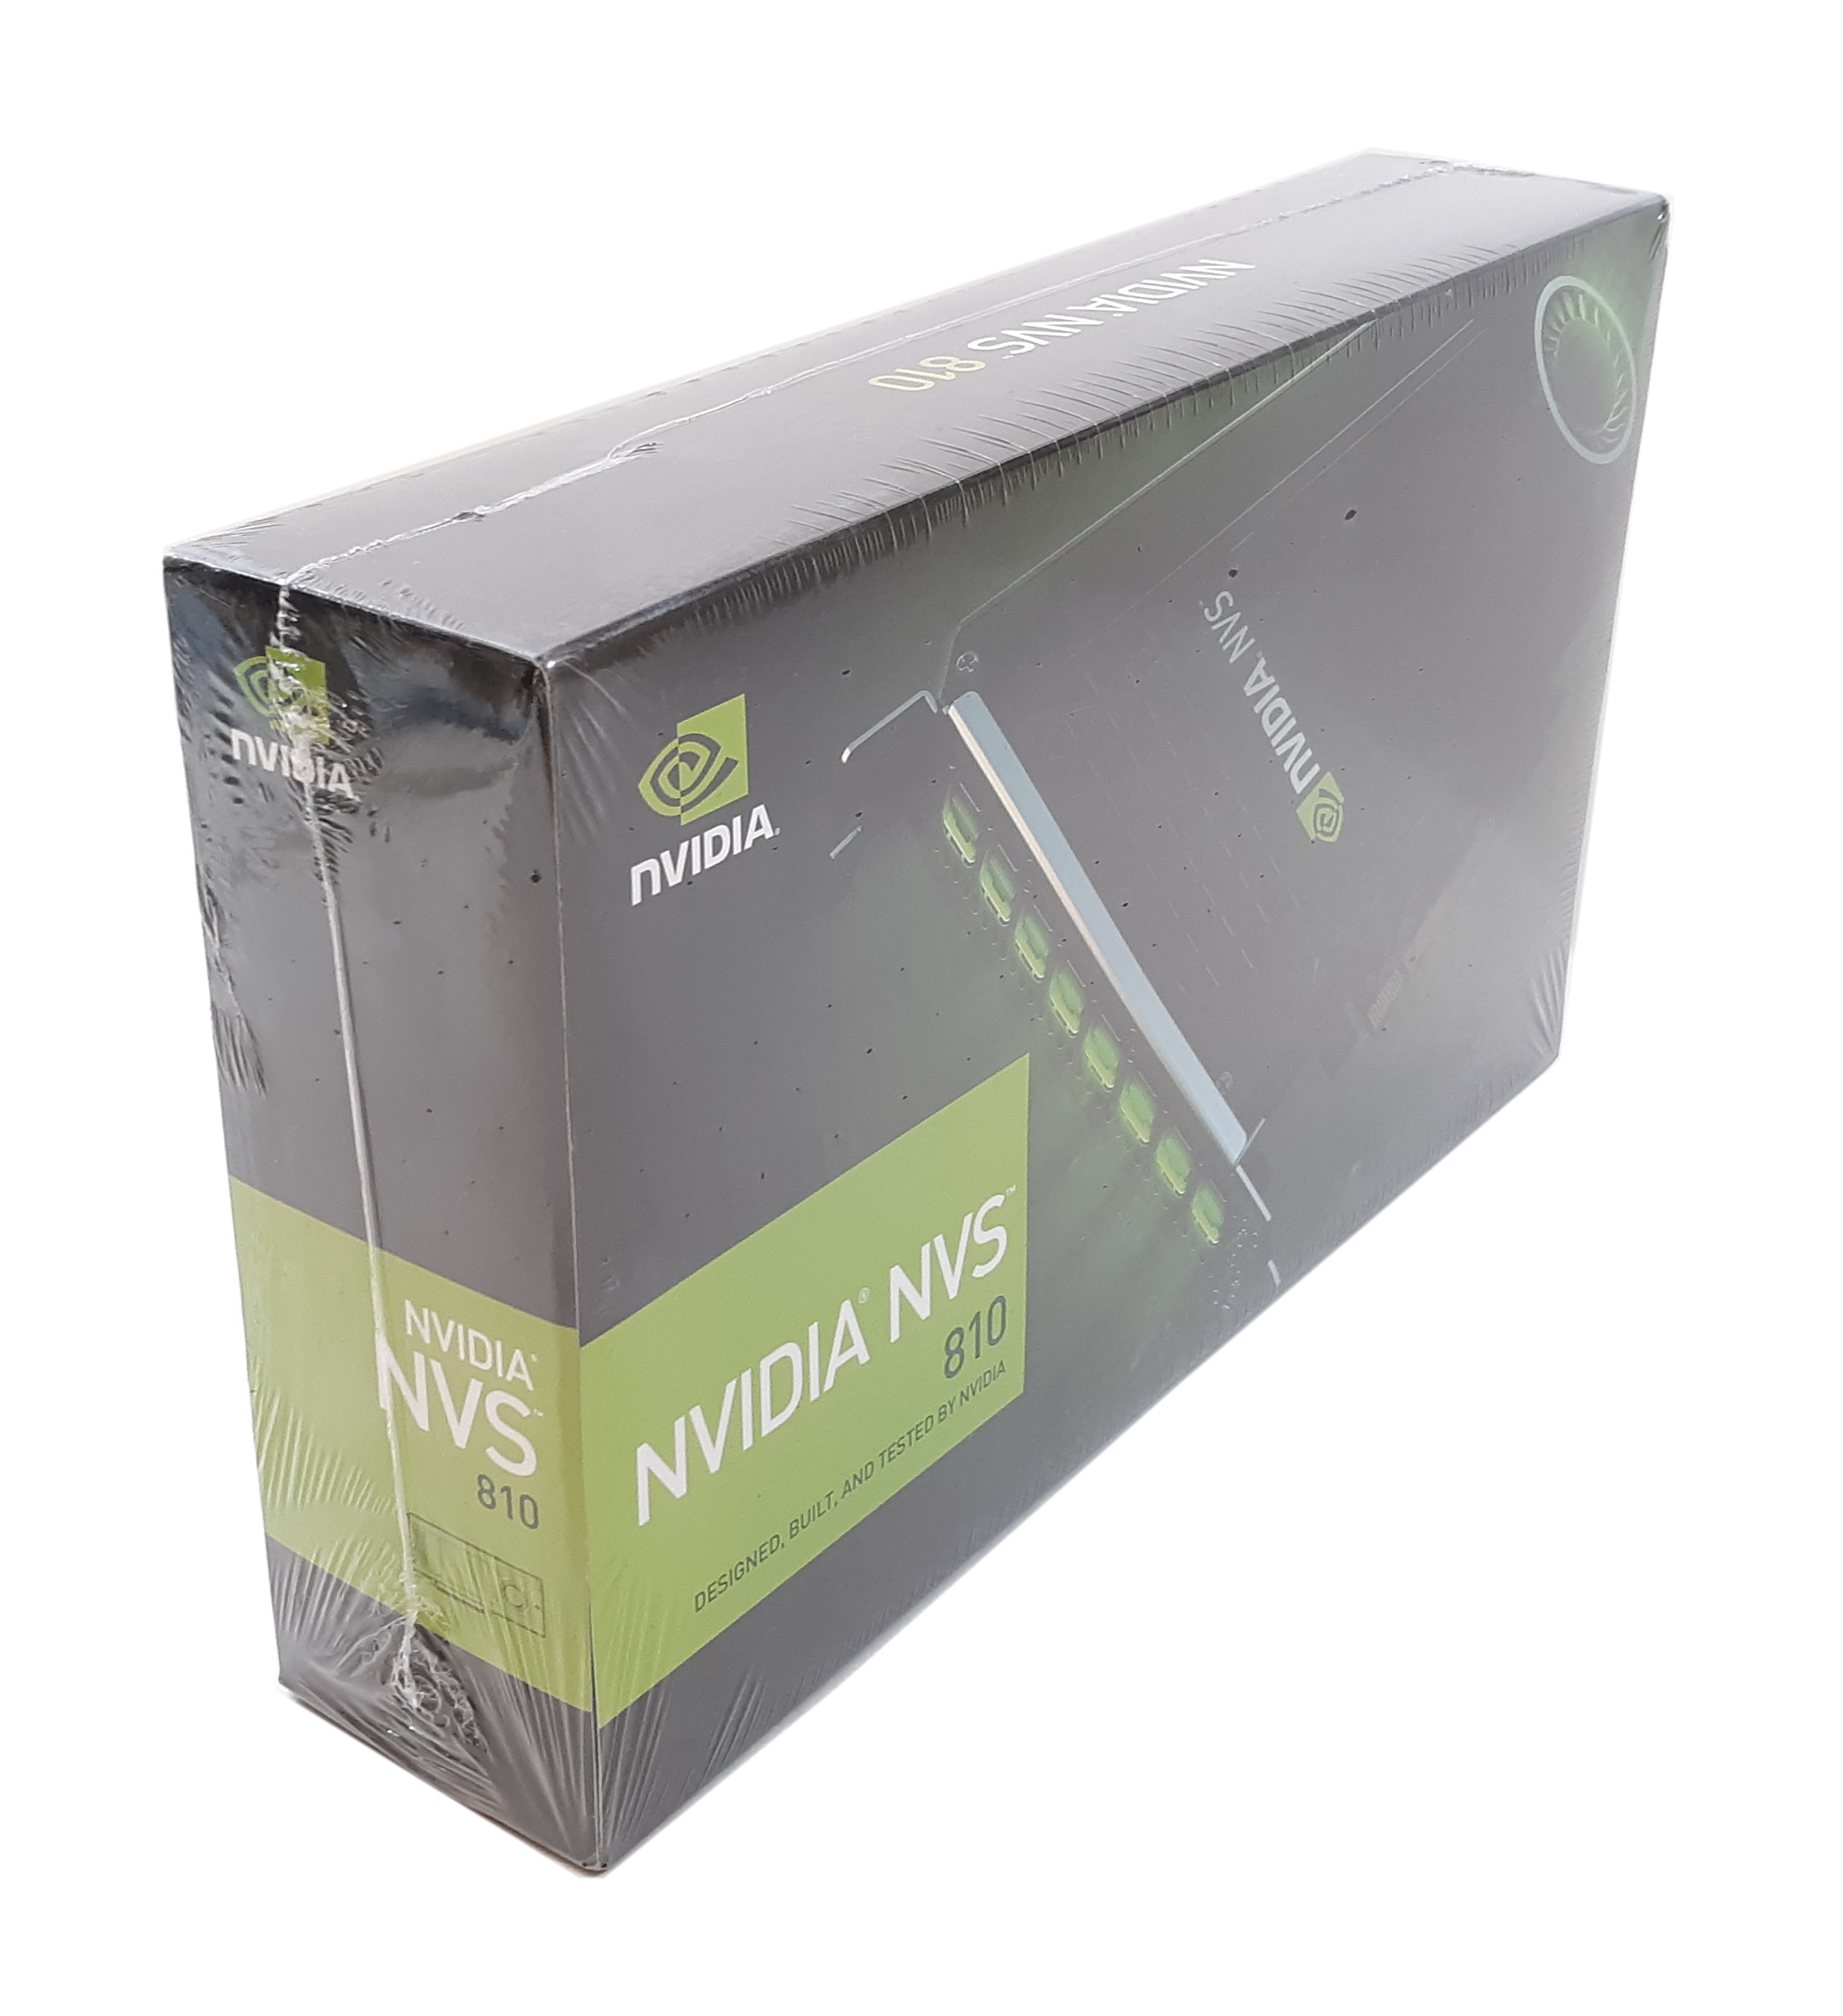 PNY Nvidia VCNVS810DVI-PB NVS810 8x miniDP 128-Bit PCIE 3.0 4GB 900-5G201-1700-000